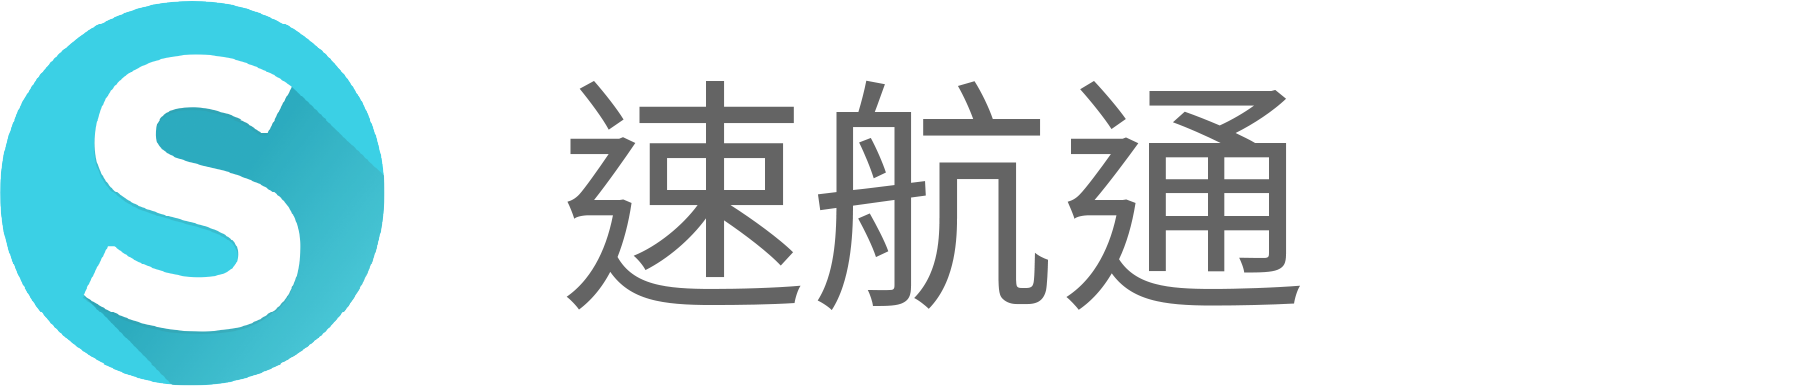 Shippabo Header Logo Chinese